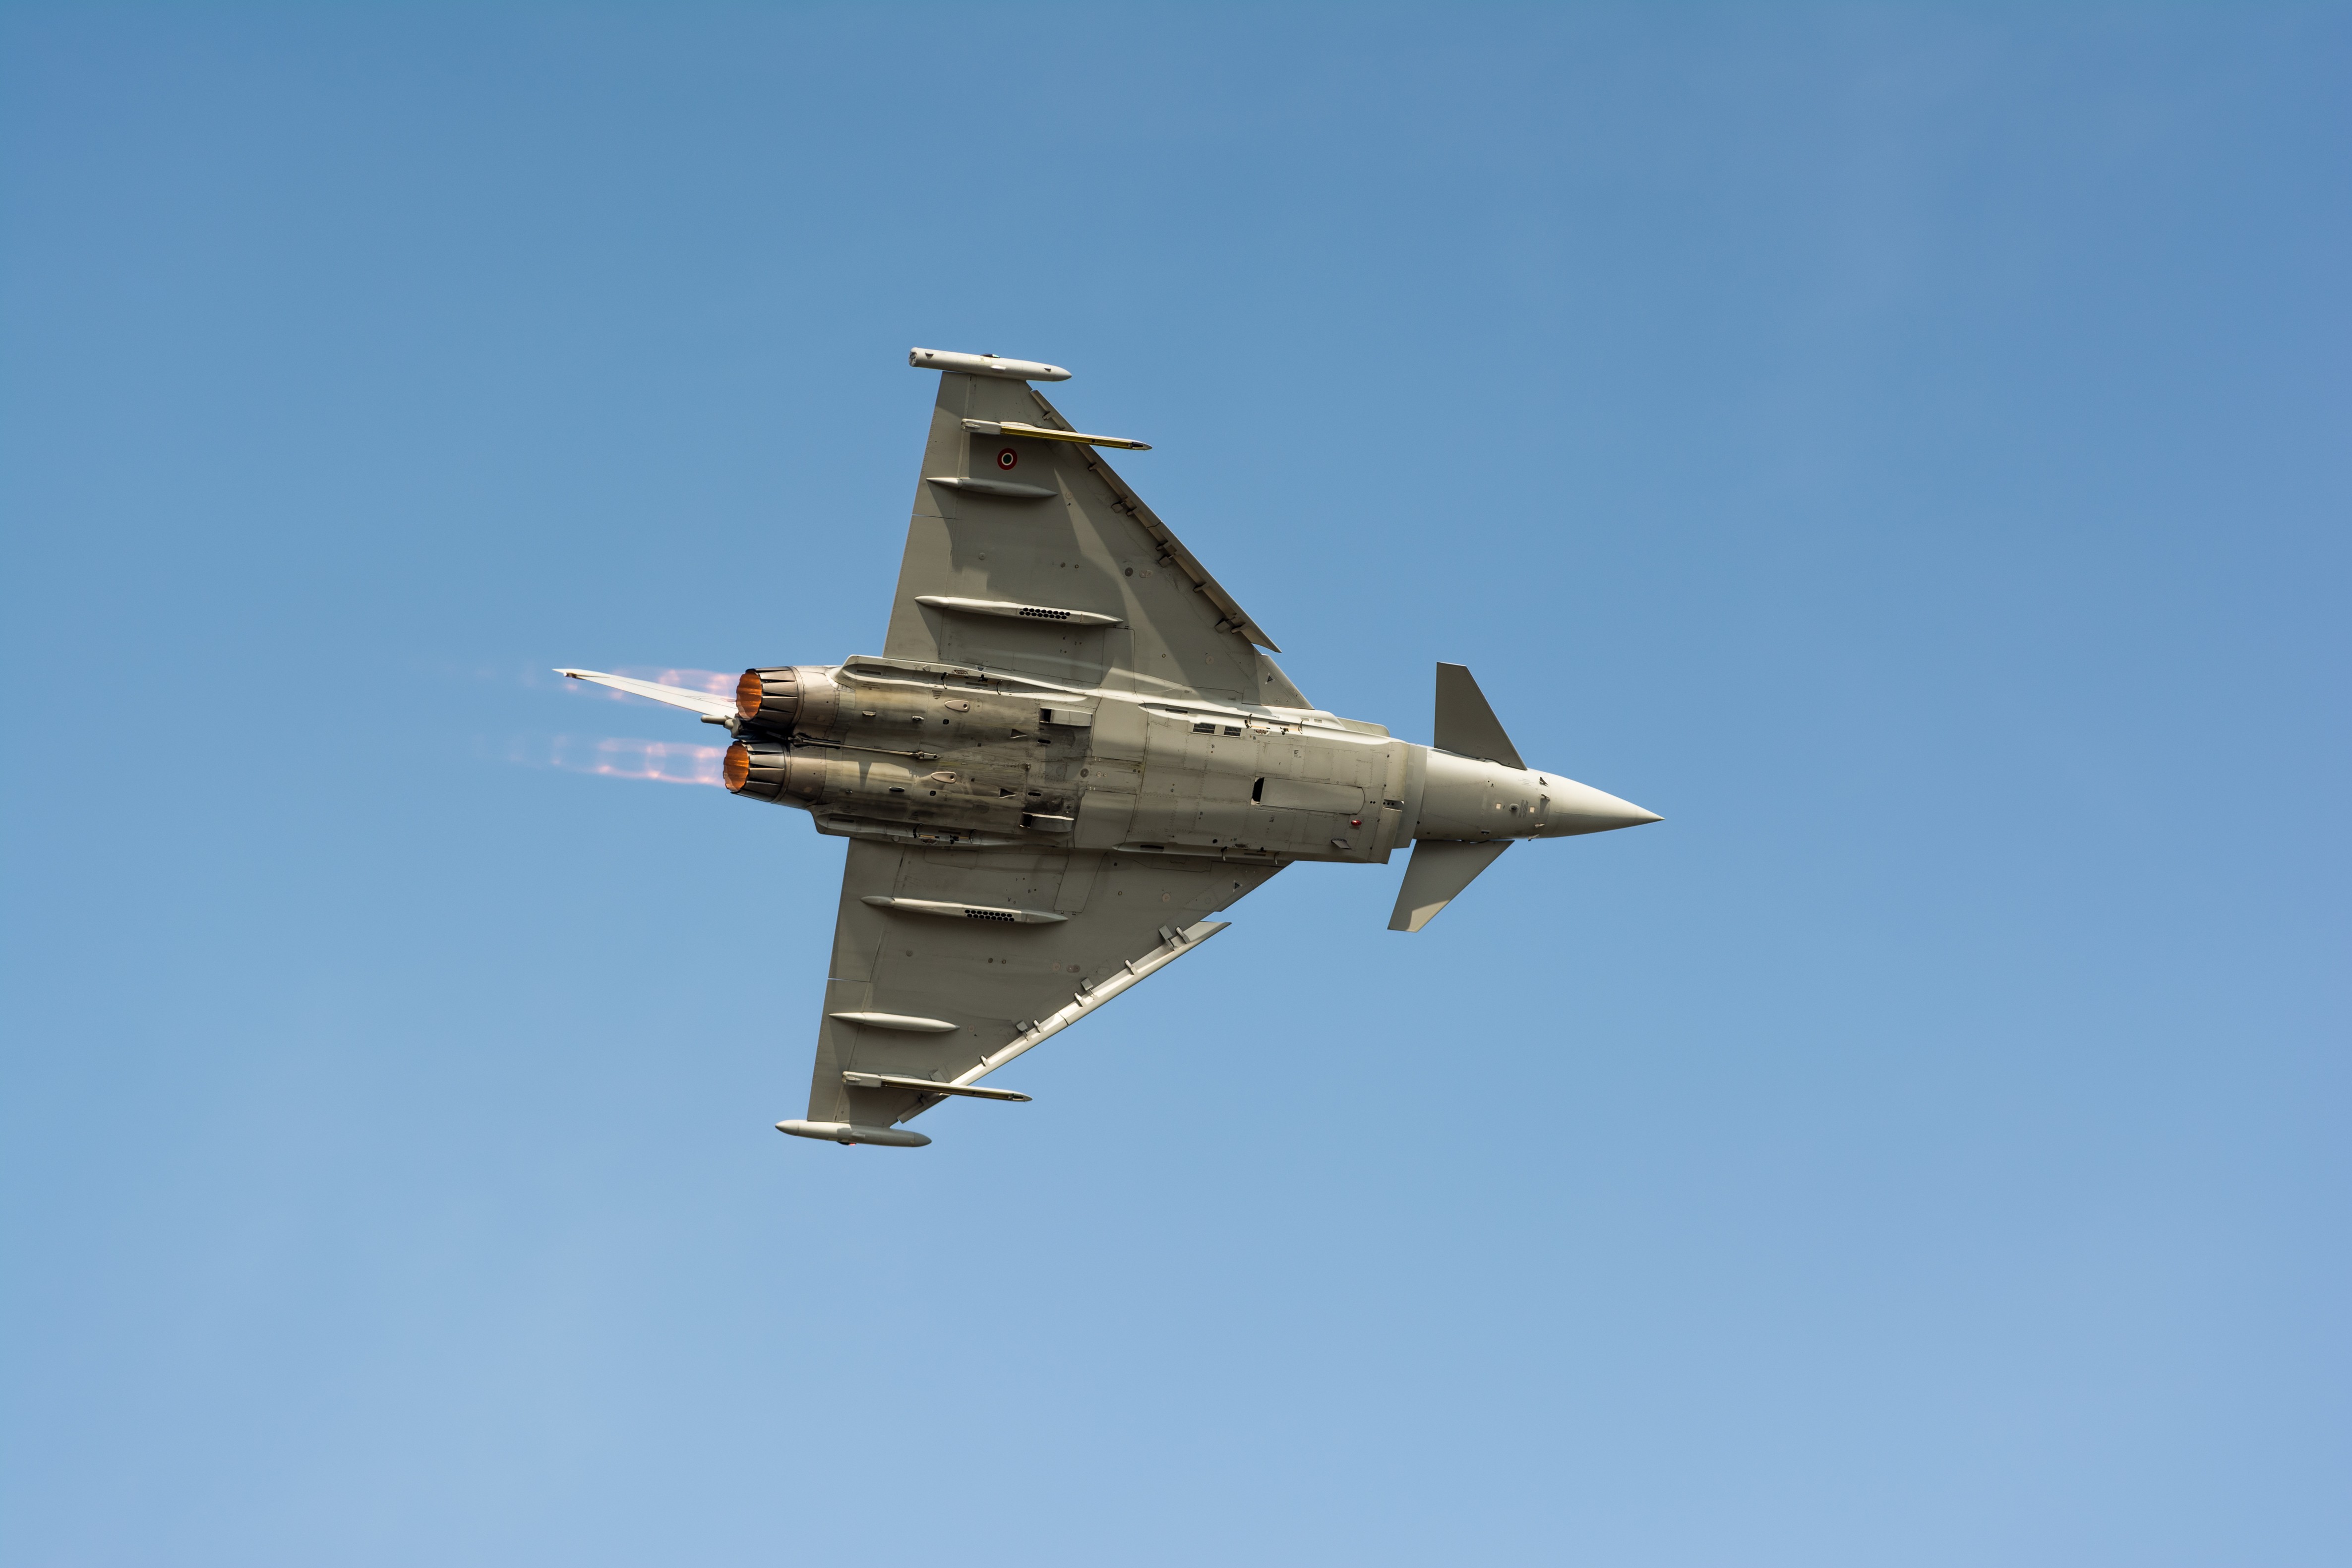 General 4743x3162 airplane airshows military Eurofighter Typhoon aircraft military aircraft military vehicle vehicle